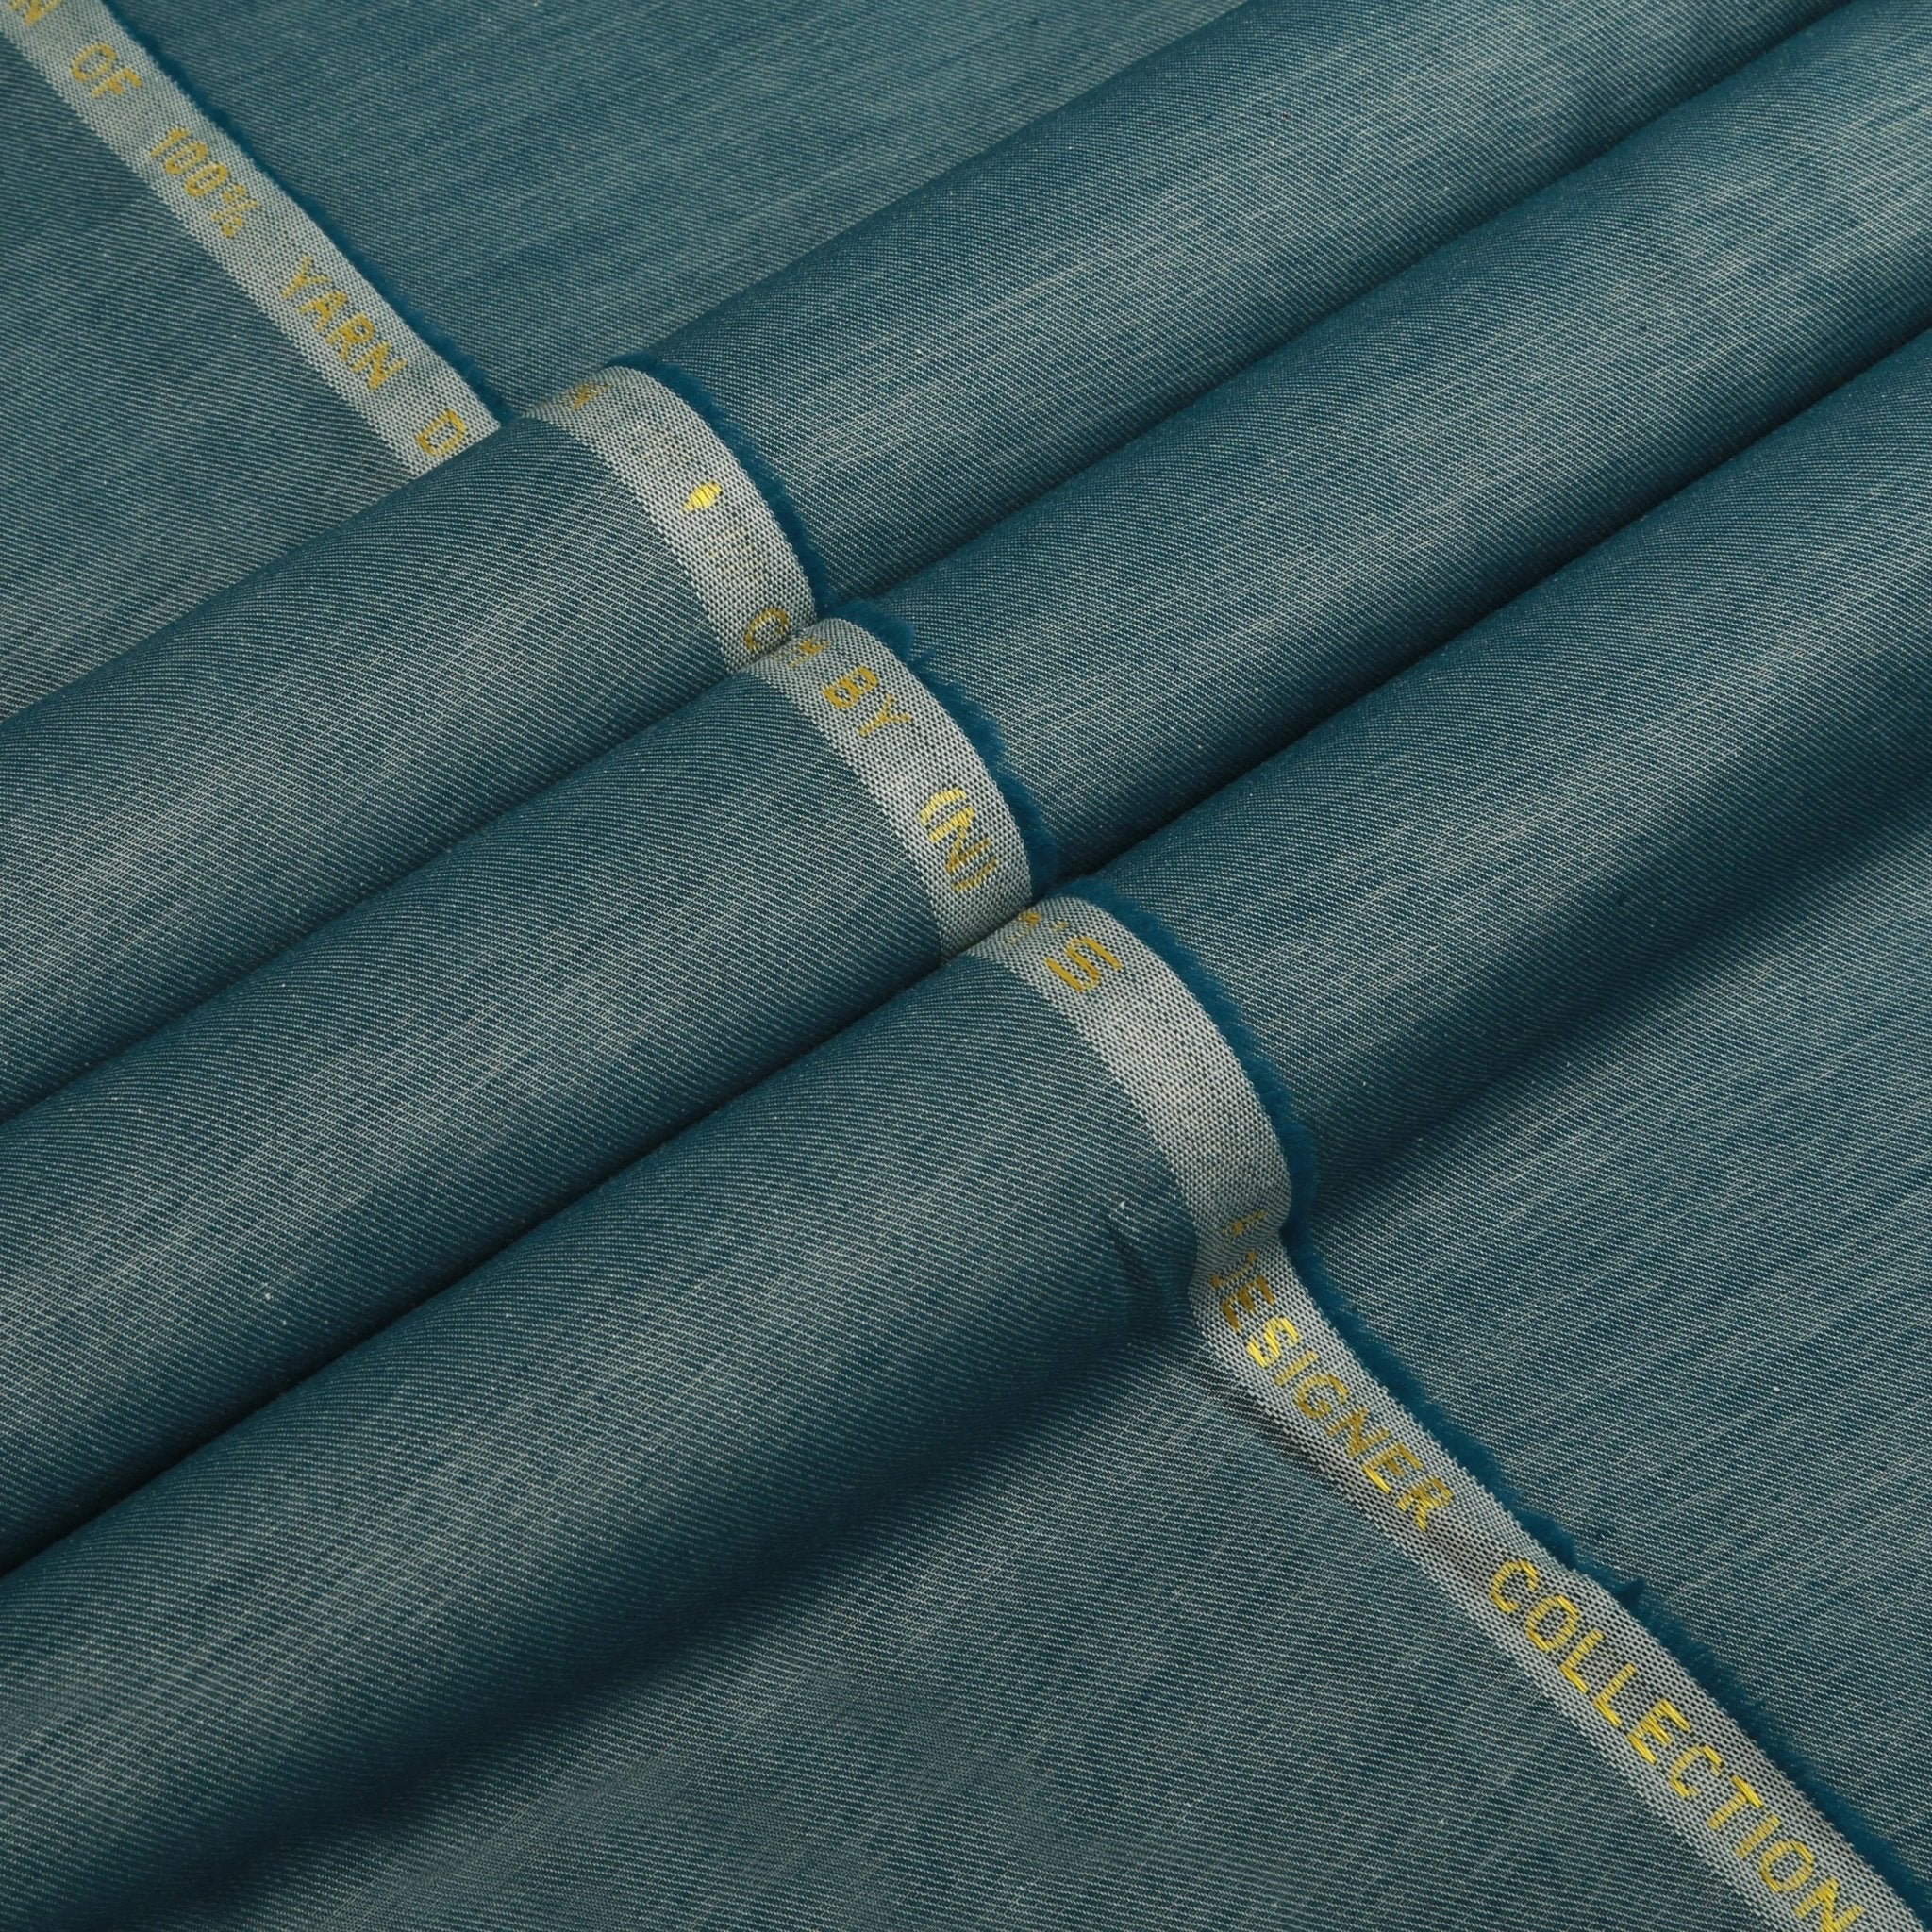 Manille textile 100% Dyneema grise 4 tonnes - Nautistock